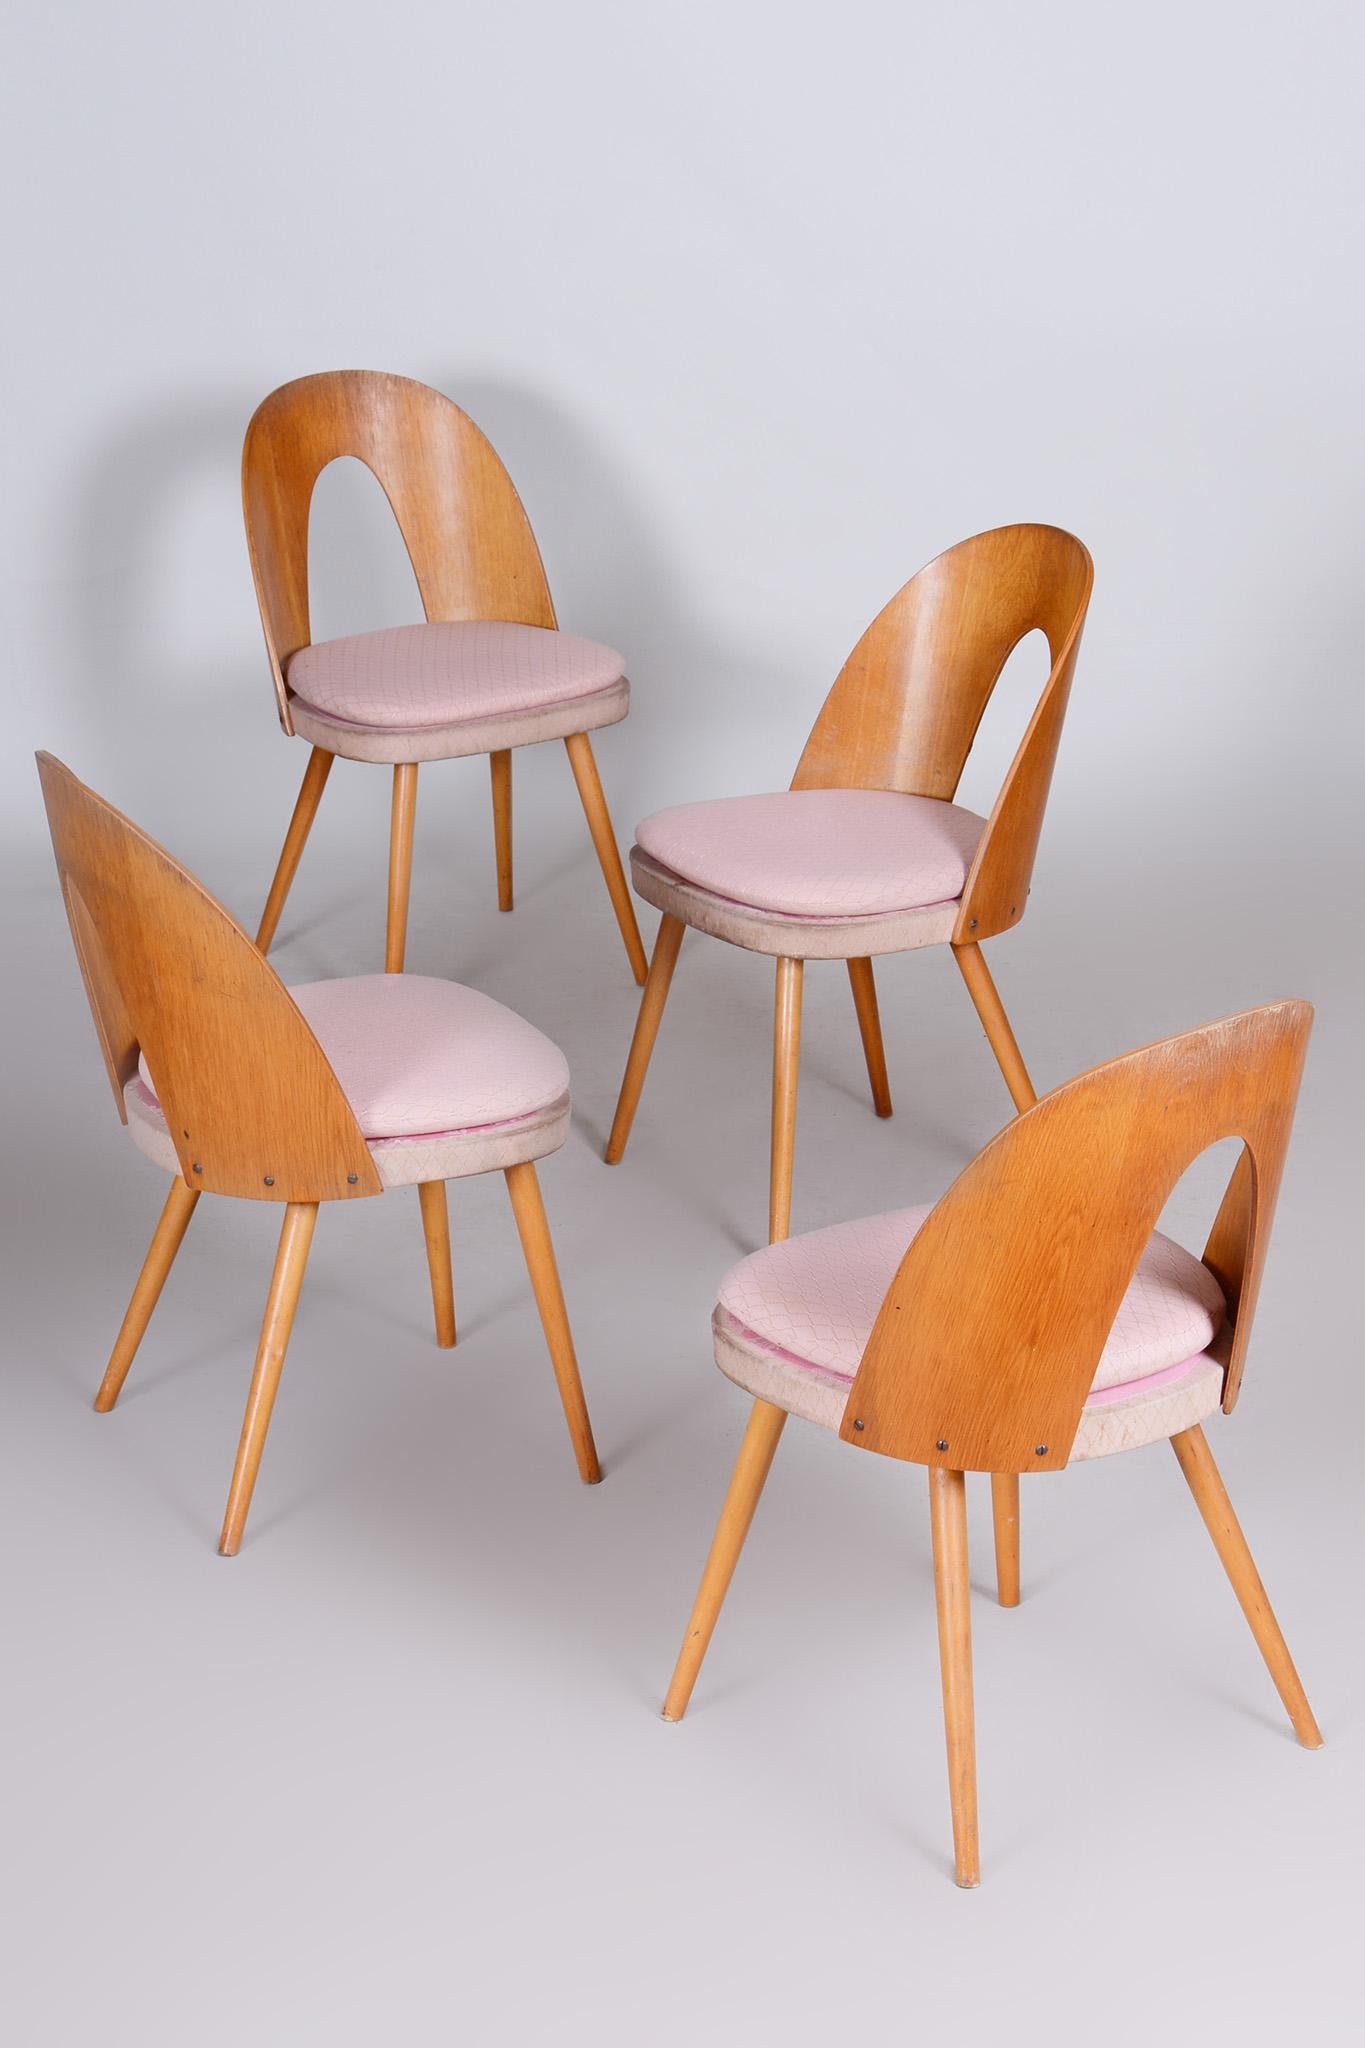 Set of Four Mid-Century Modern Chairs Made in 1950s Czechia by Antonín Šuman 3